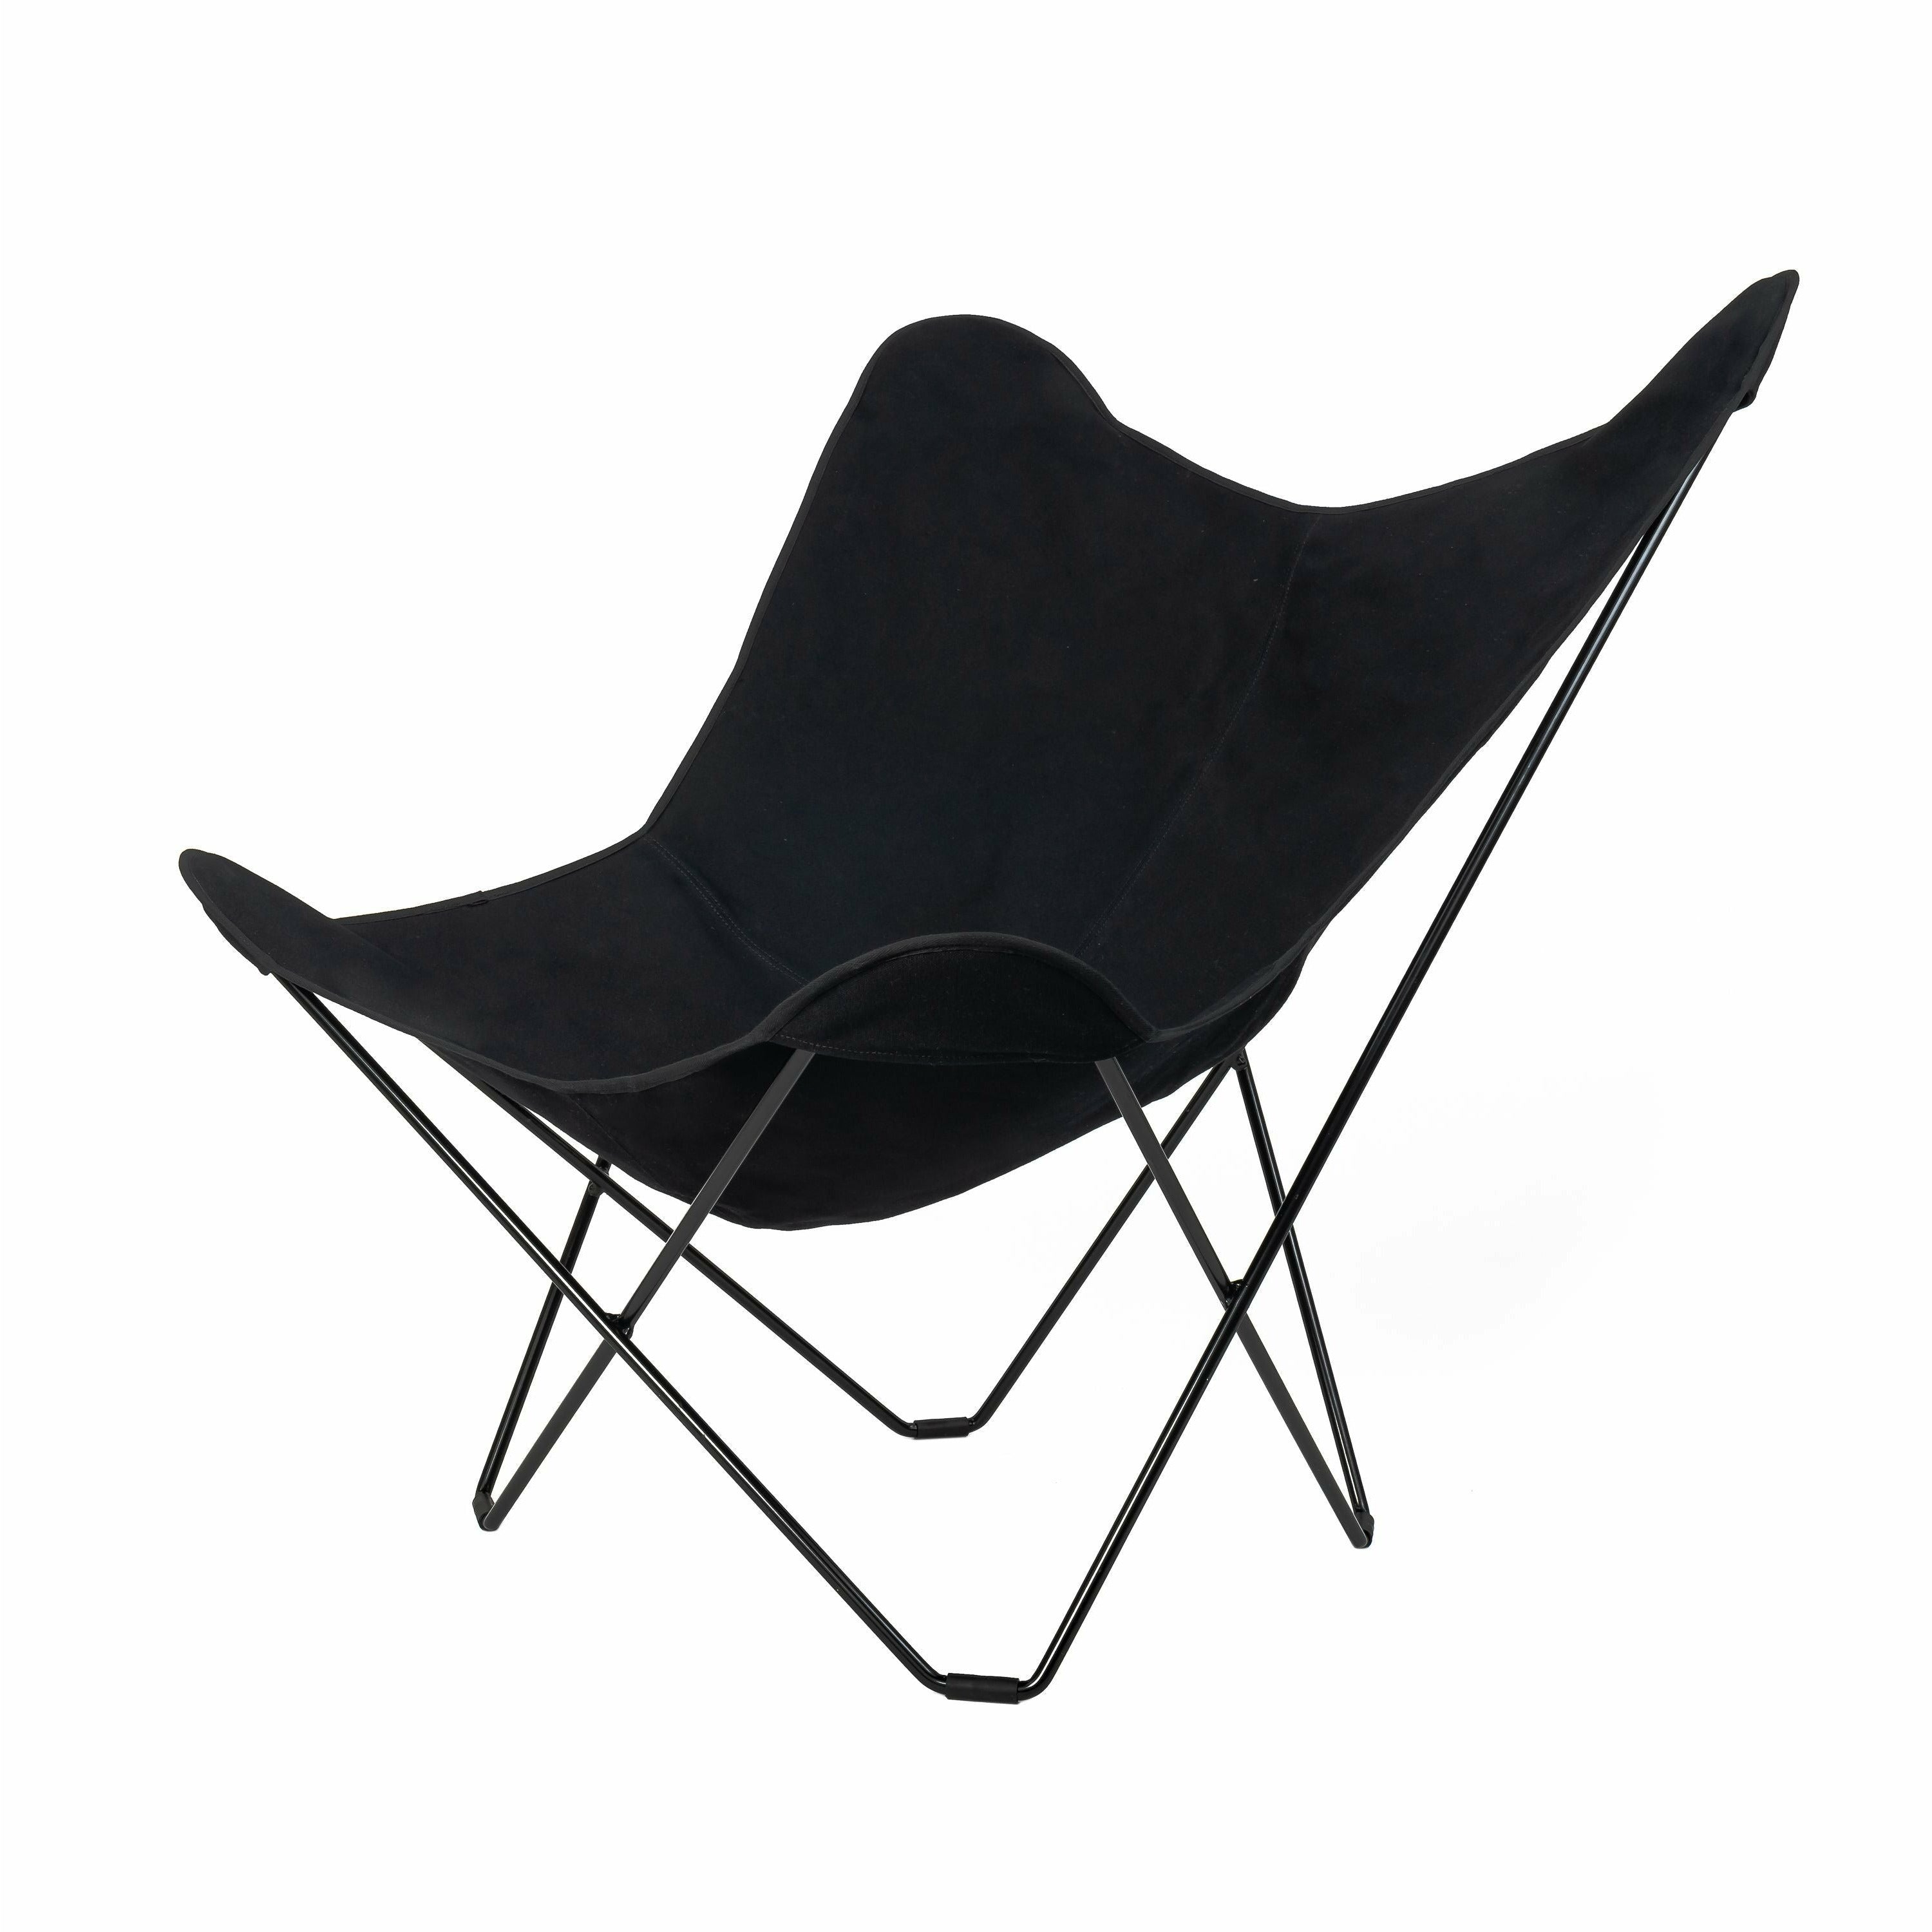 Cuero Cotton Canvas Mariposa Chair, Black With Black Frame